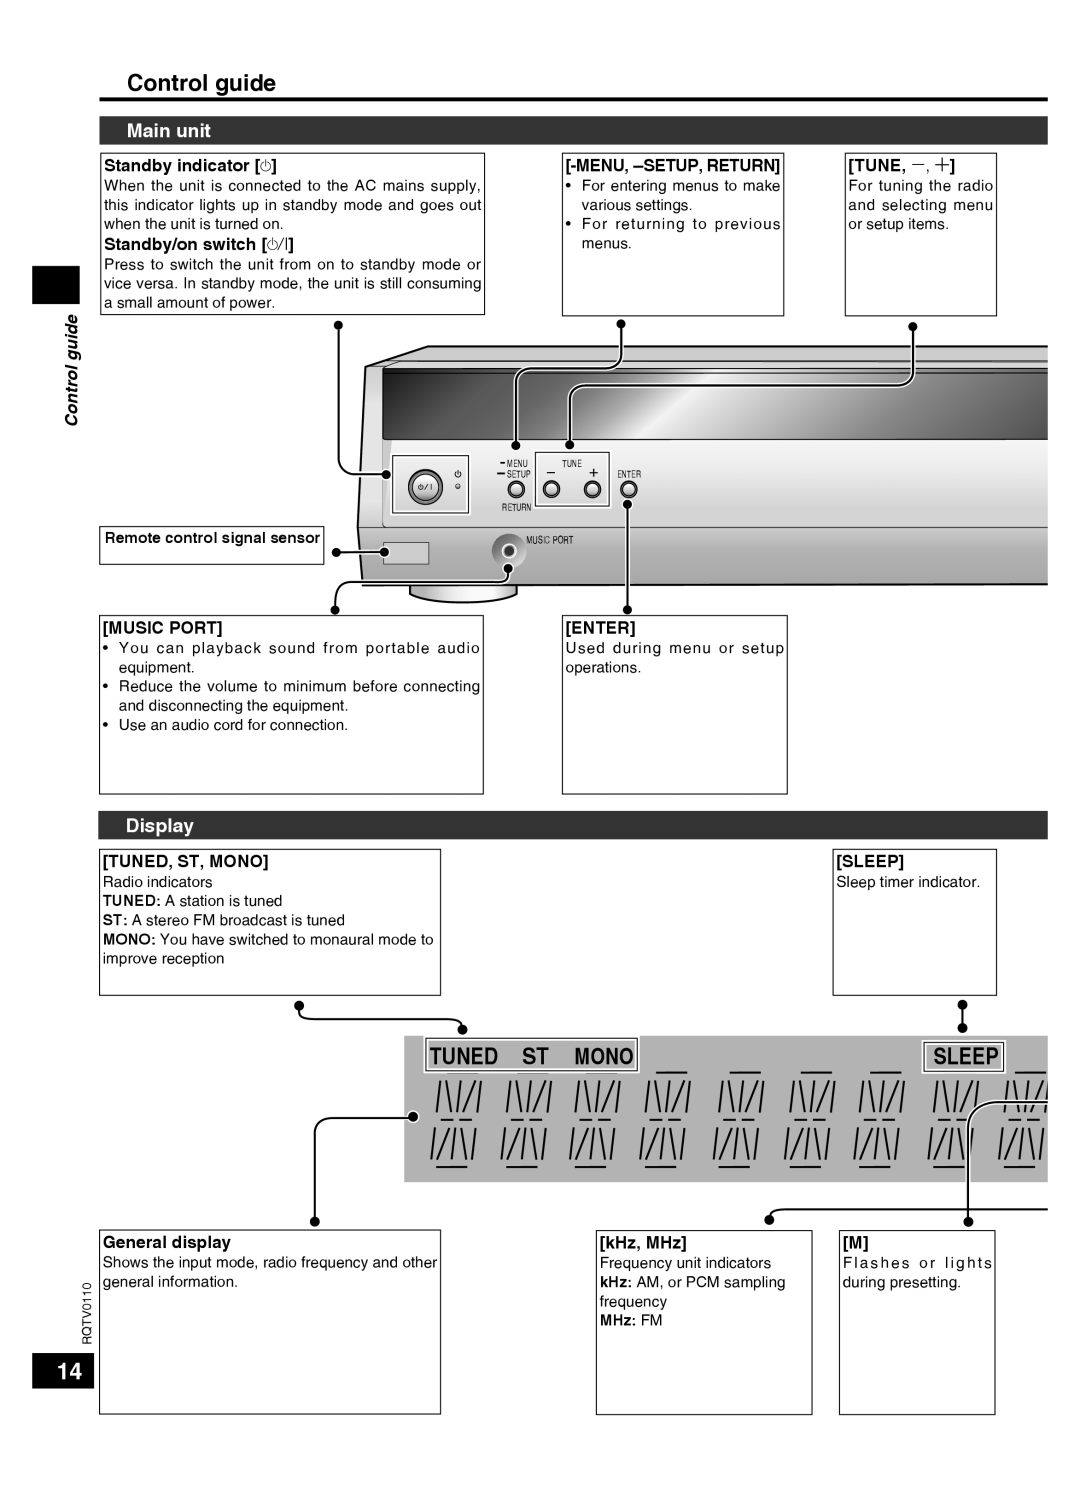 Panasonic SC-HT60 specifications Control guide, Tuned St Mono, Sleep, Main unit, Display 